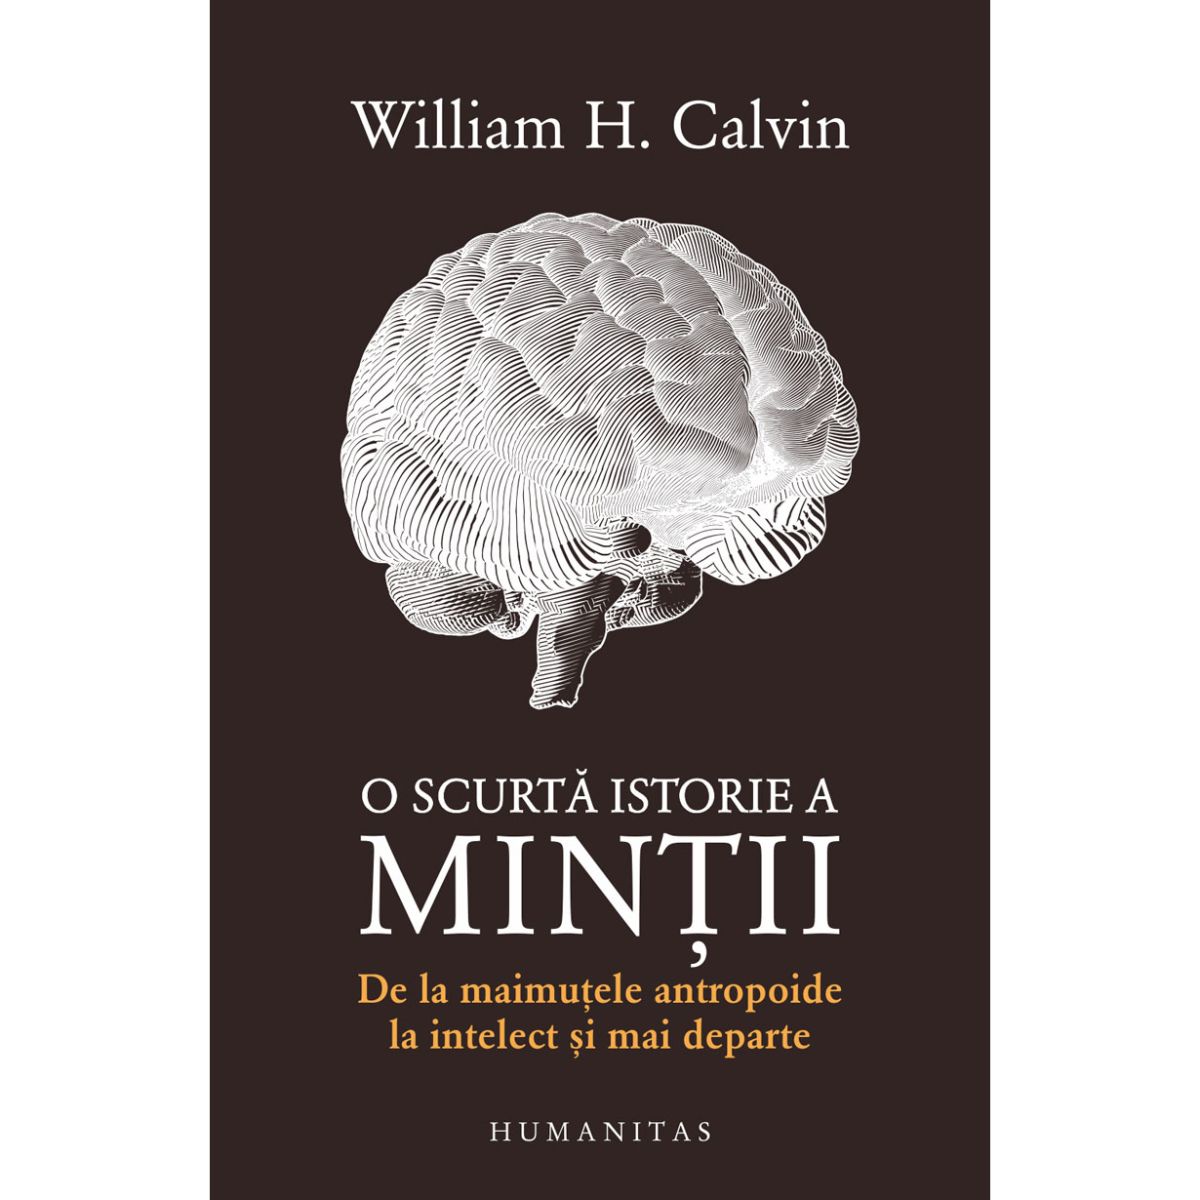 O scurta istorie a mintii, Wiliam H. Calvin Humanitas